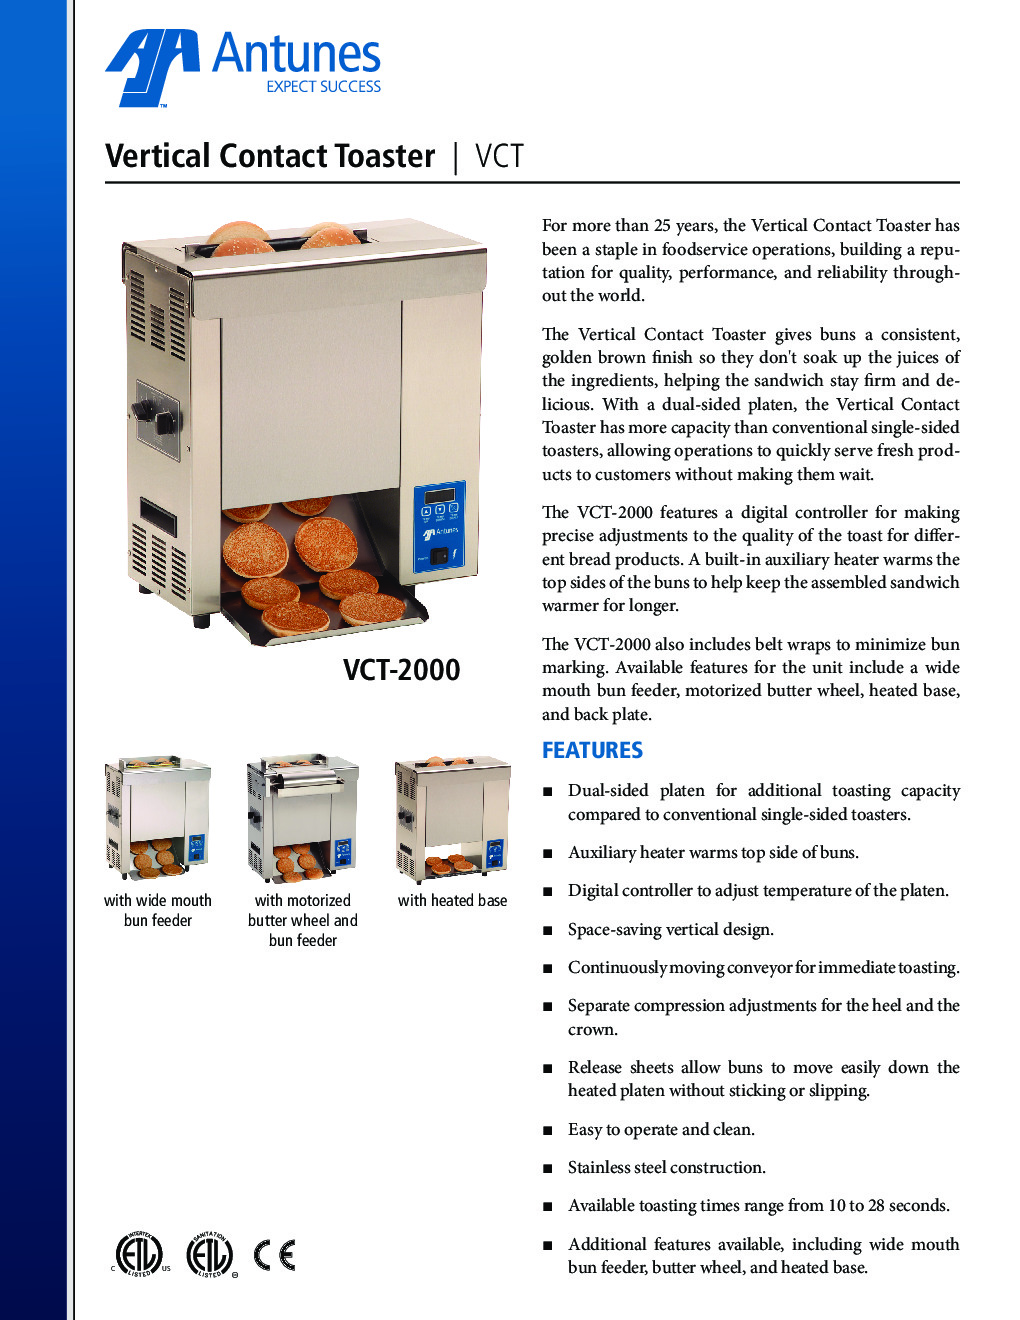 Antunes VCT-2000-9210123 Countertop Conveyor Type Vertical Contact Toaster